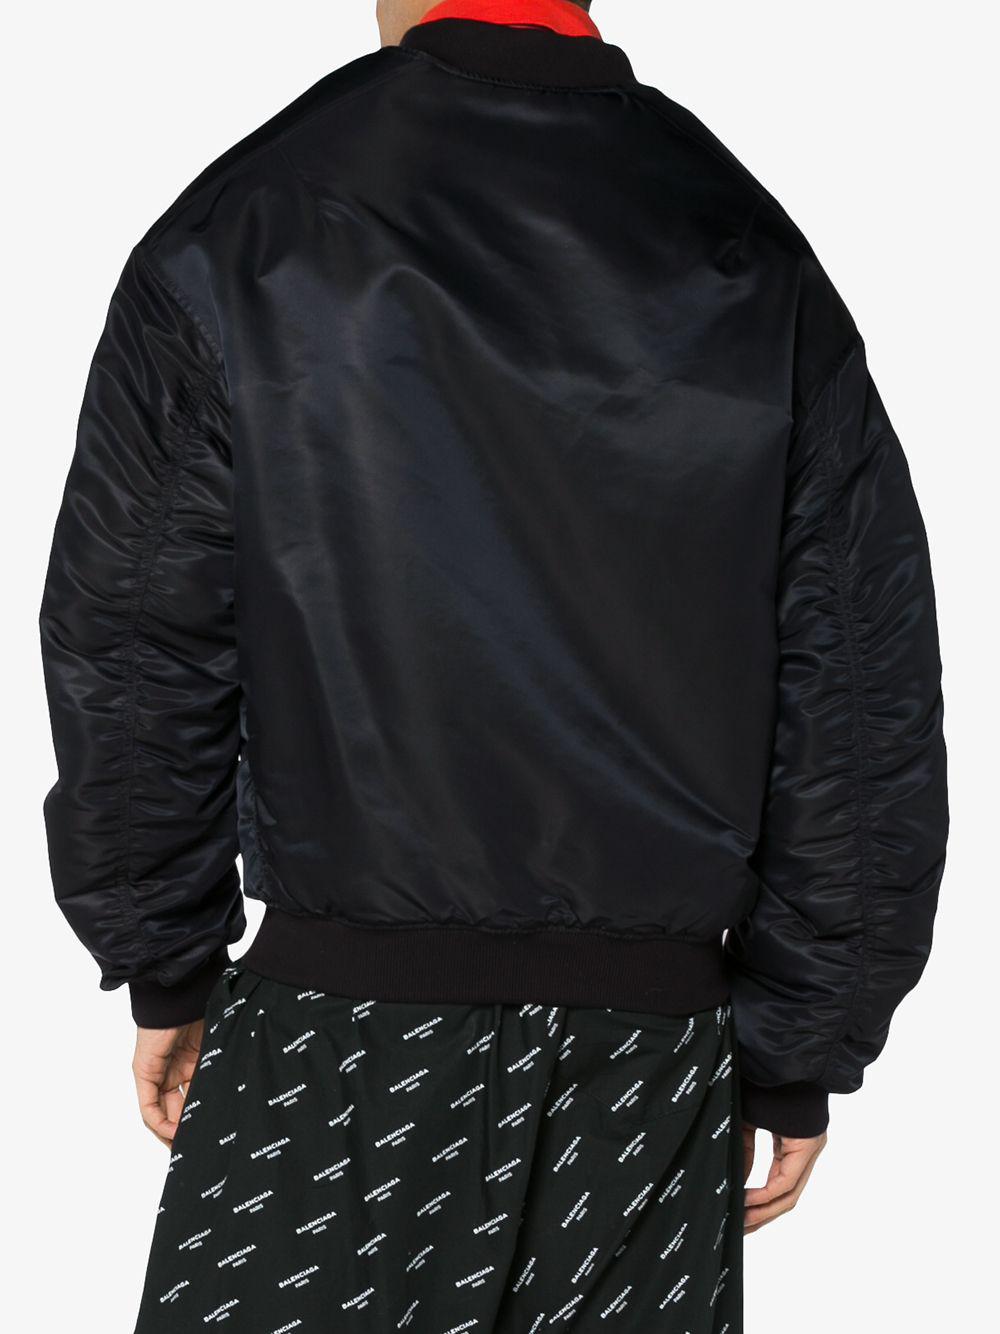 Balenciaga Synthetic Wobble Bomber Jacket in Black for Men - Lyst